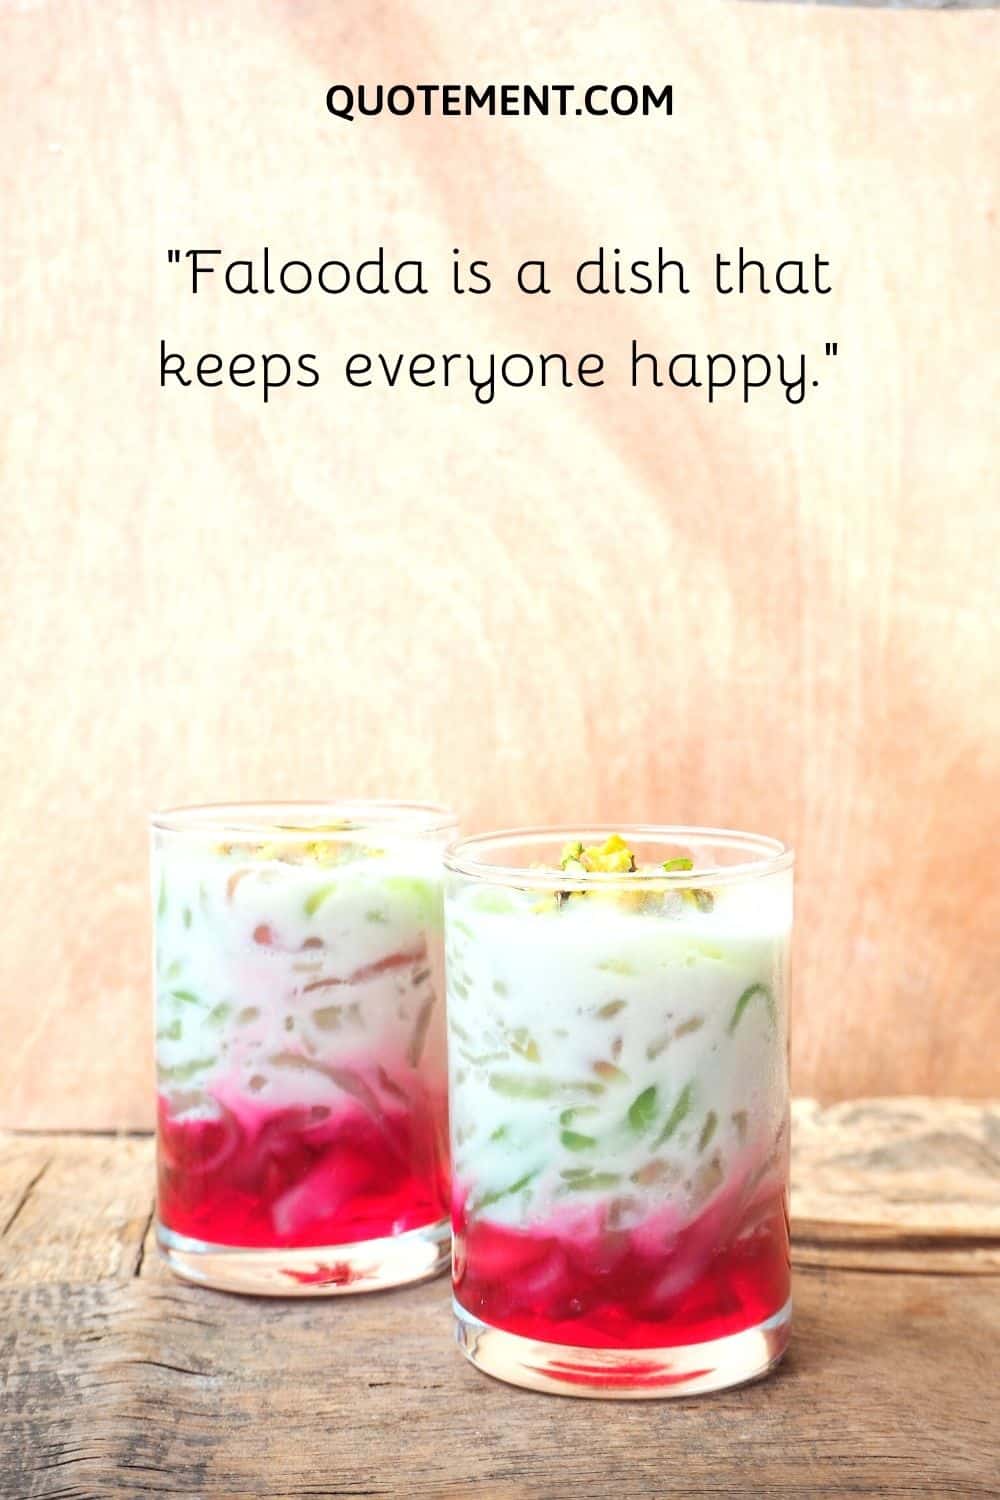 Falooda is a dish that keeps everyone happy